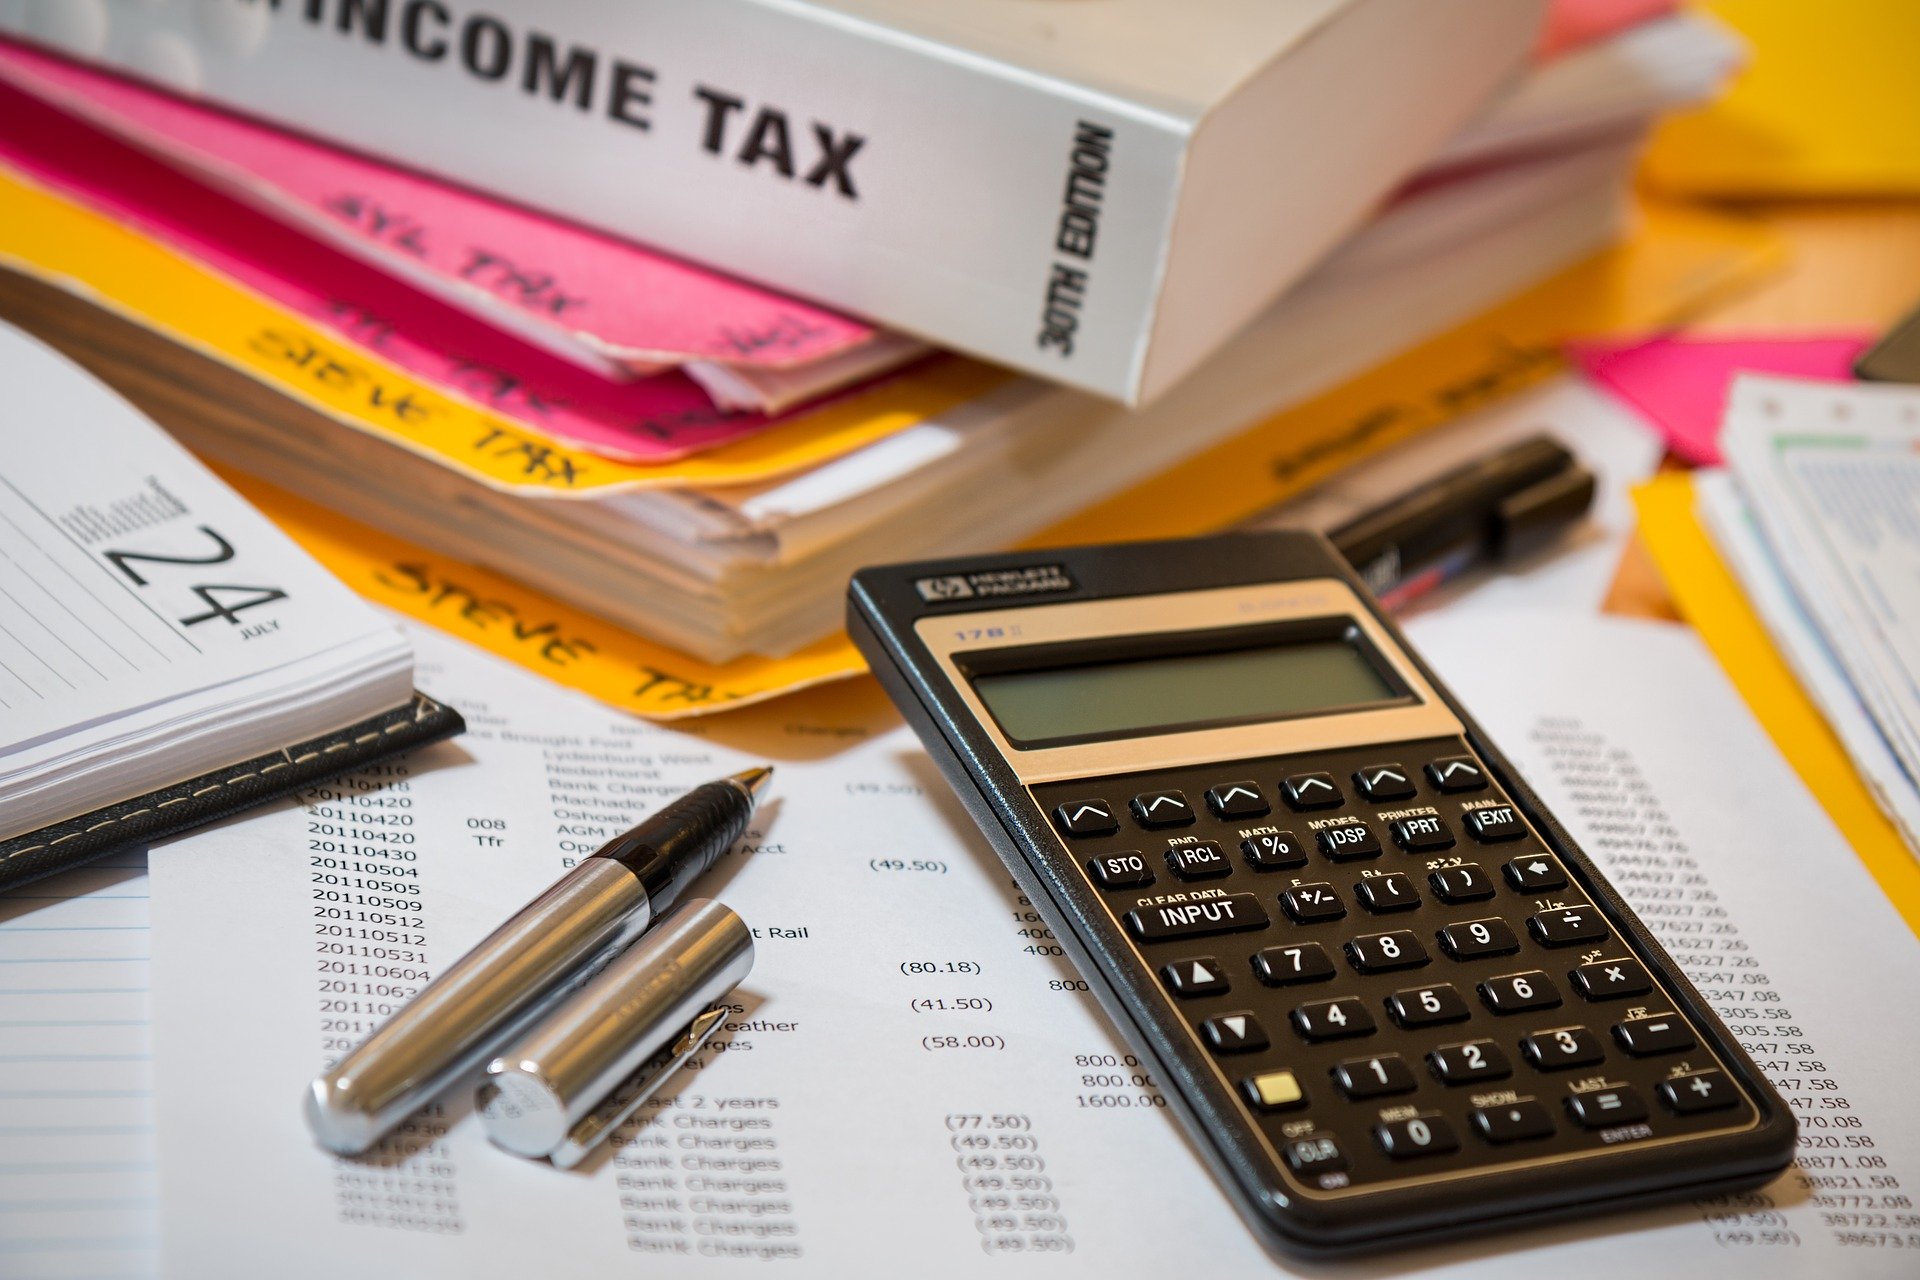 Tax files, a pen and a calculator